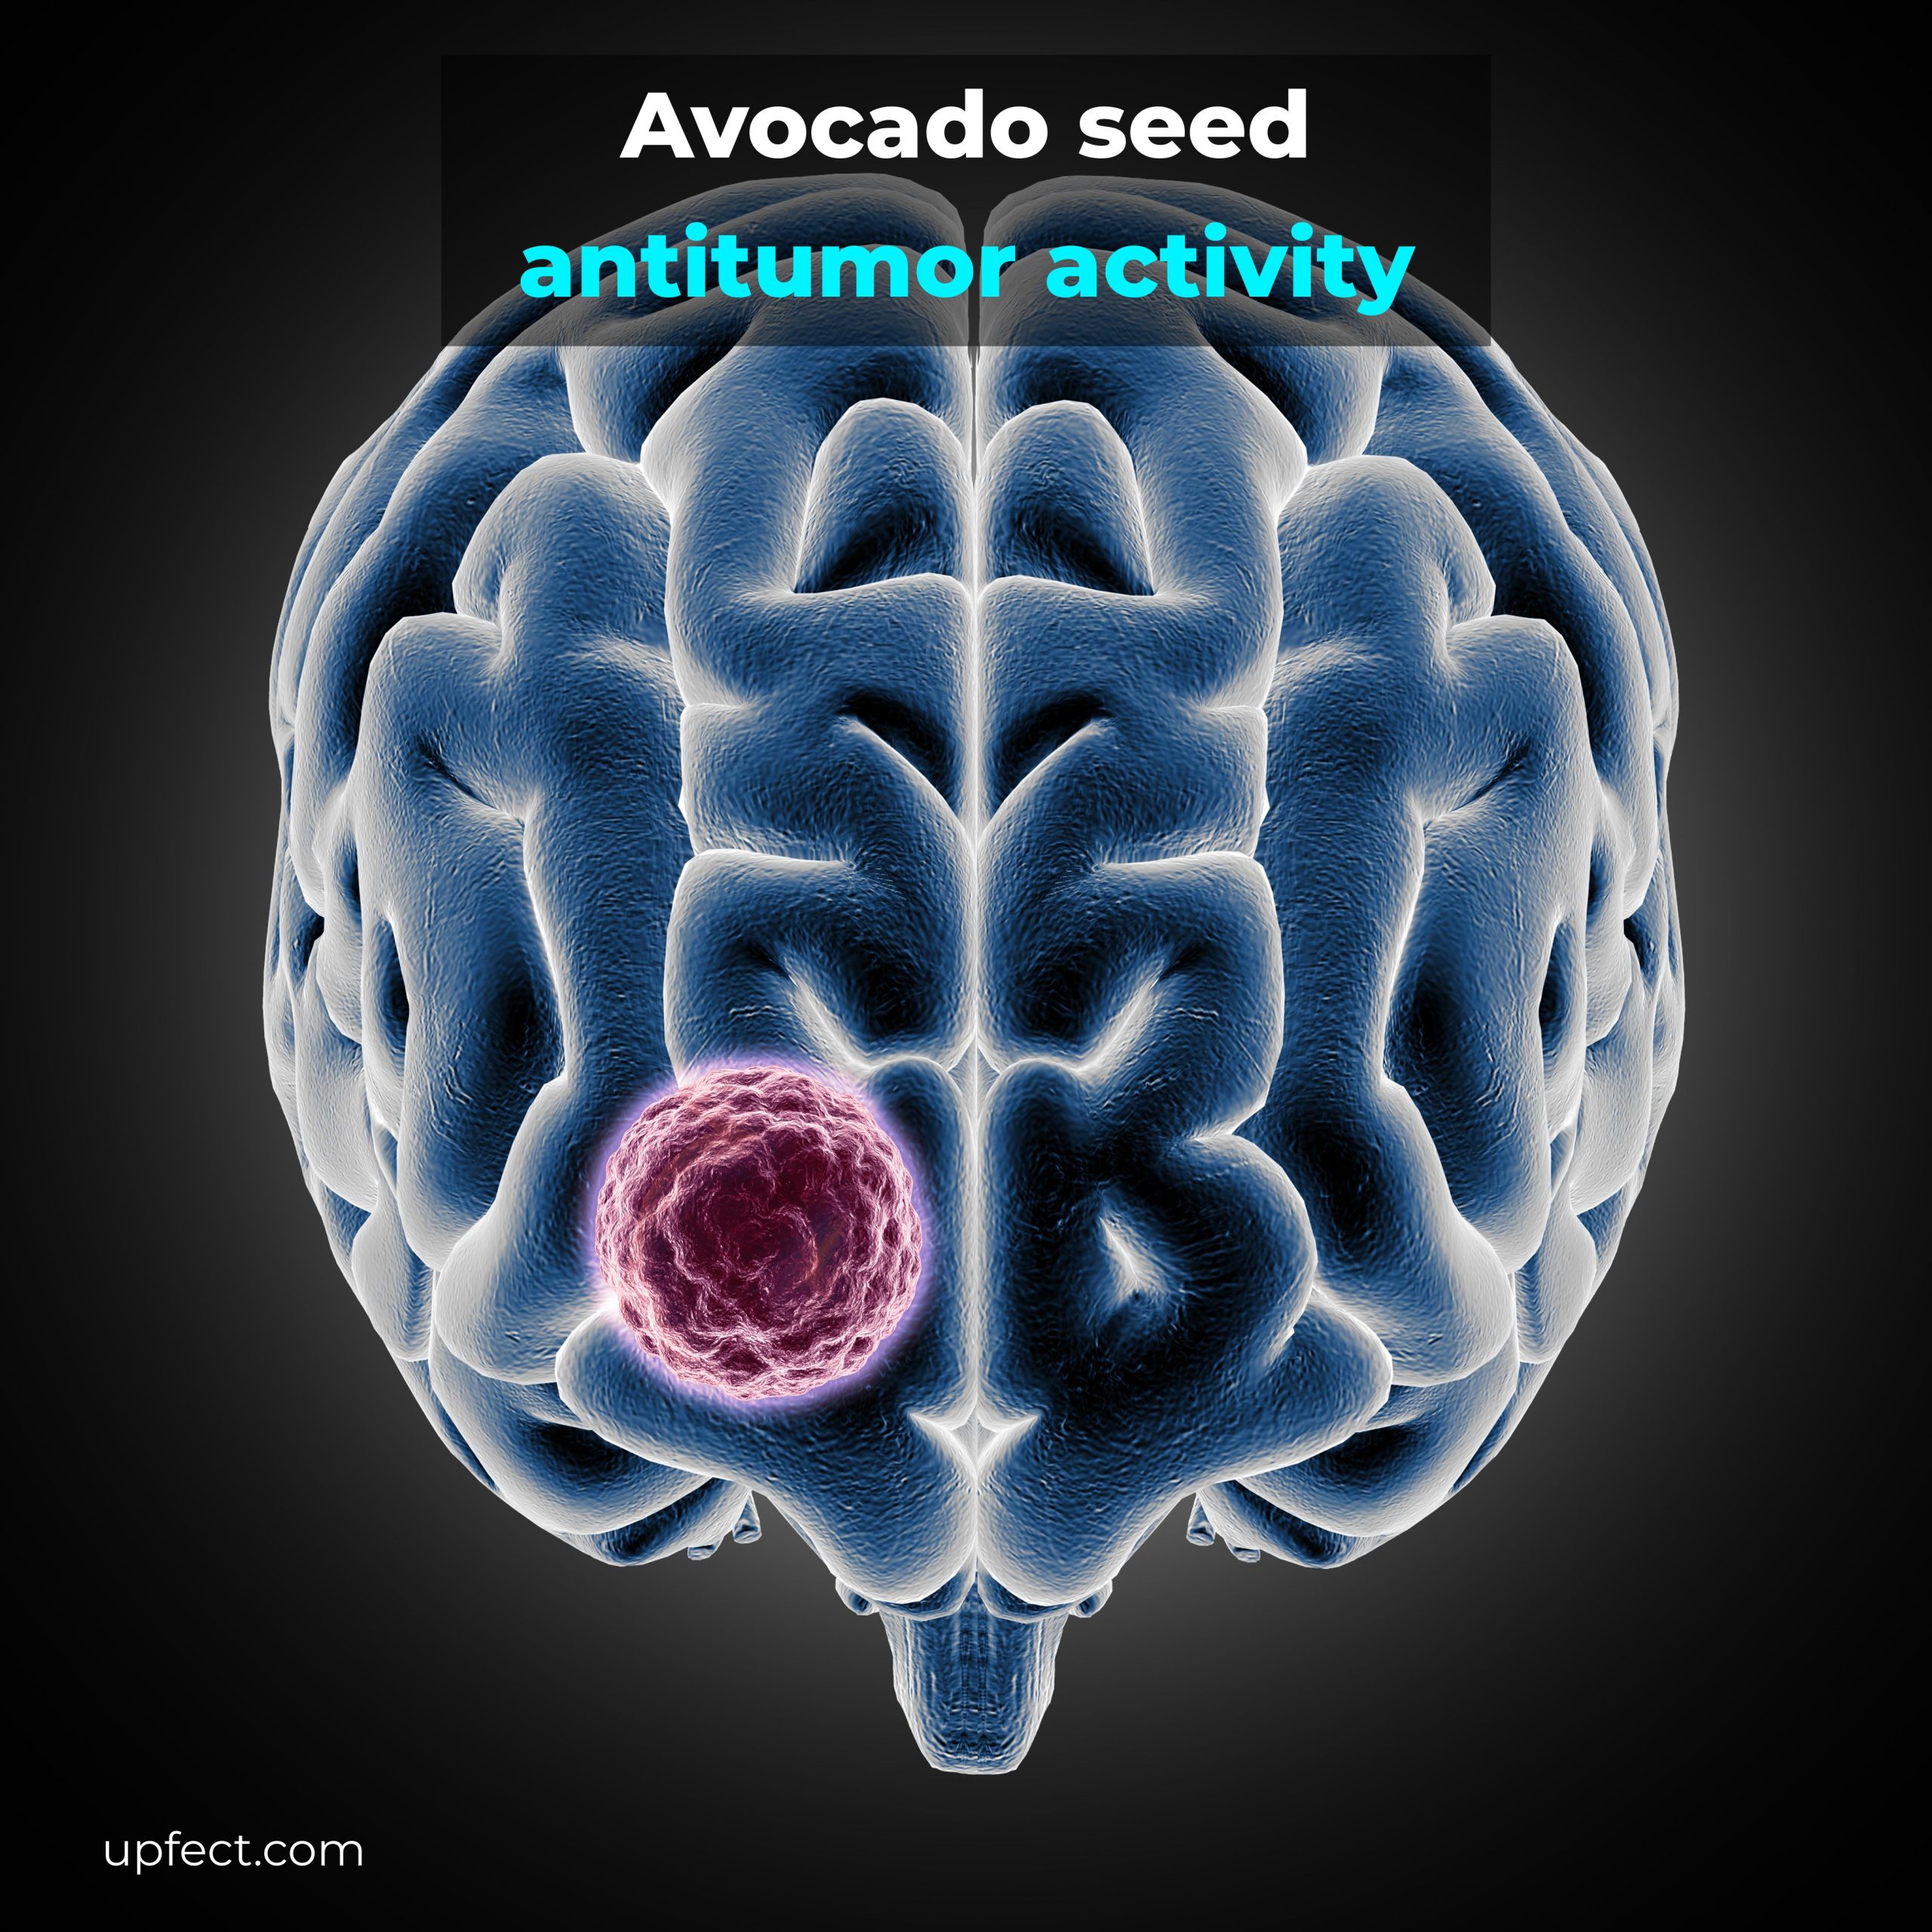 Avocado Seed Antitumor Activity